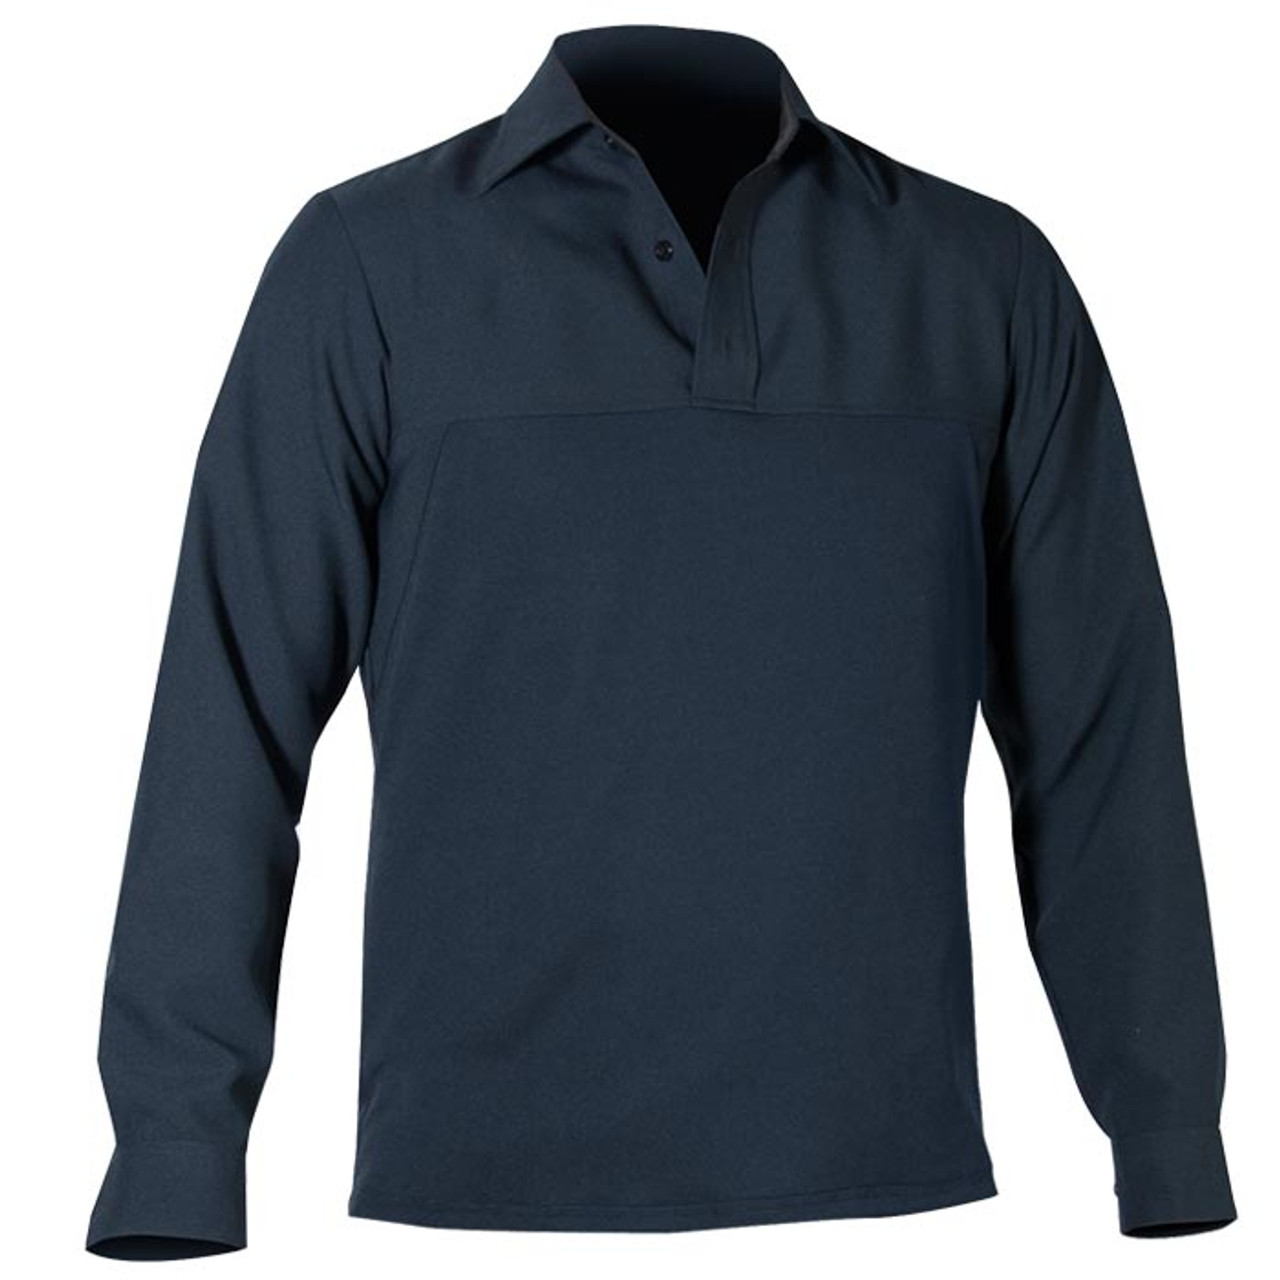 BLAUER ARMORSKIN WINTER BASE SHIRT WOOL BLEND DK NAVY LS - Howard Uniform  Company